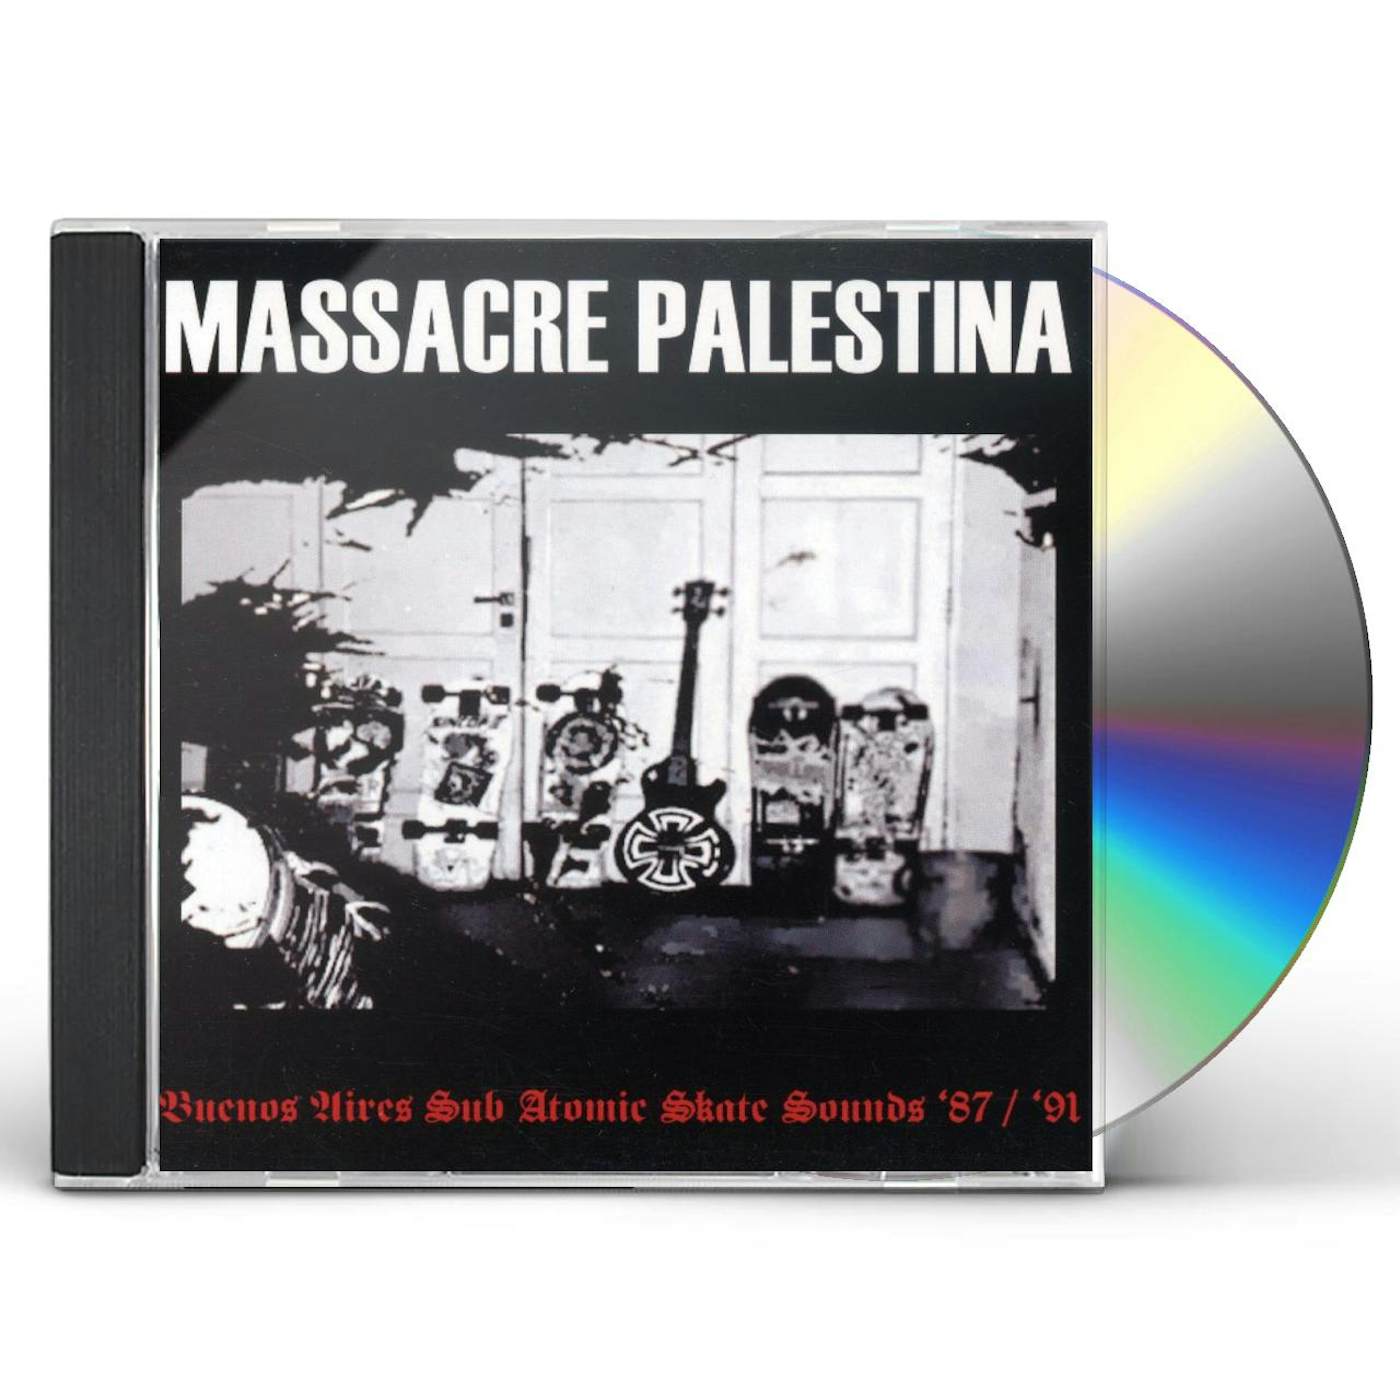 MASSACRE PALESTINA CD